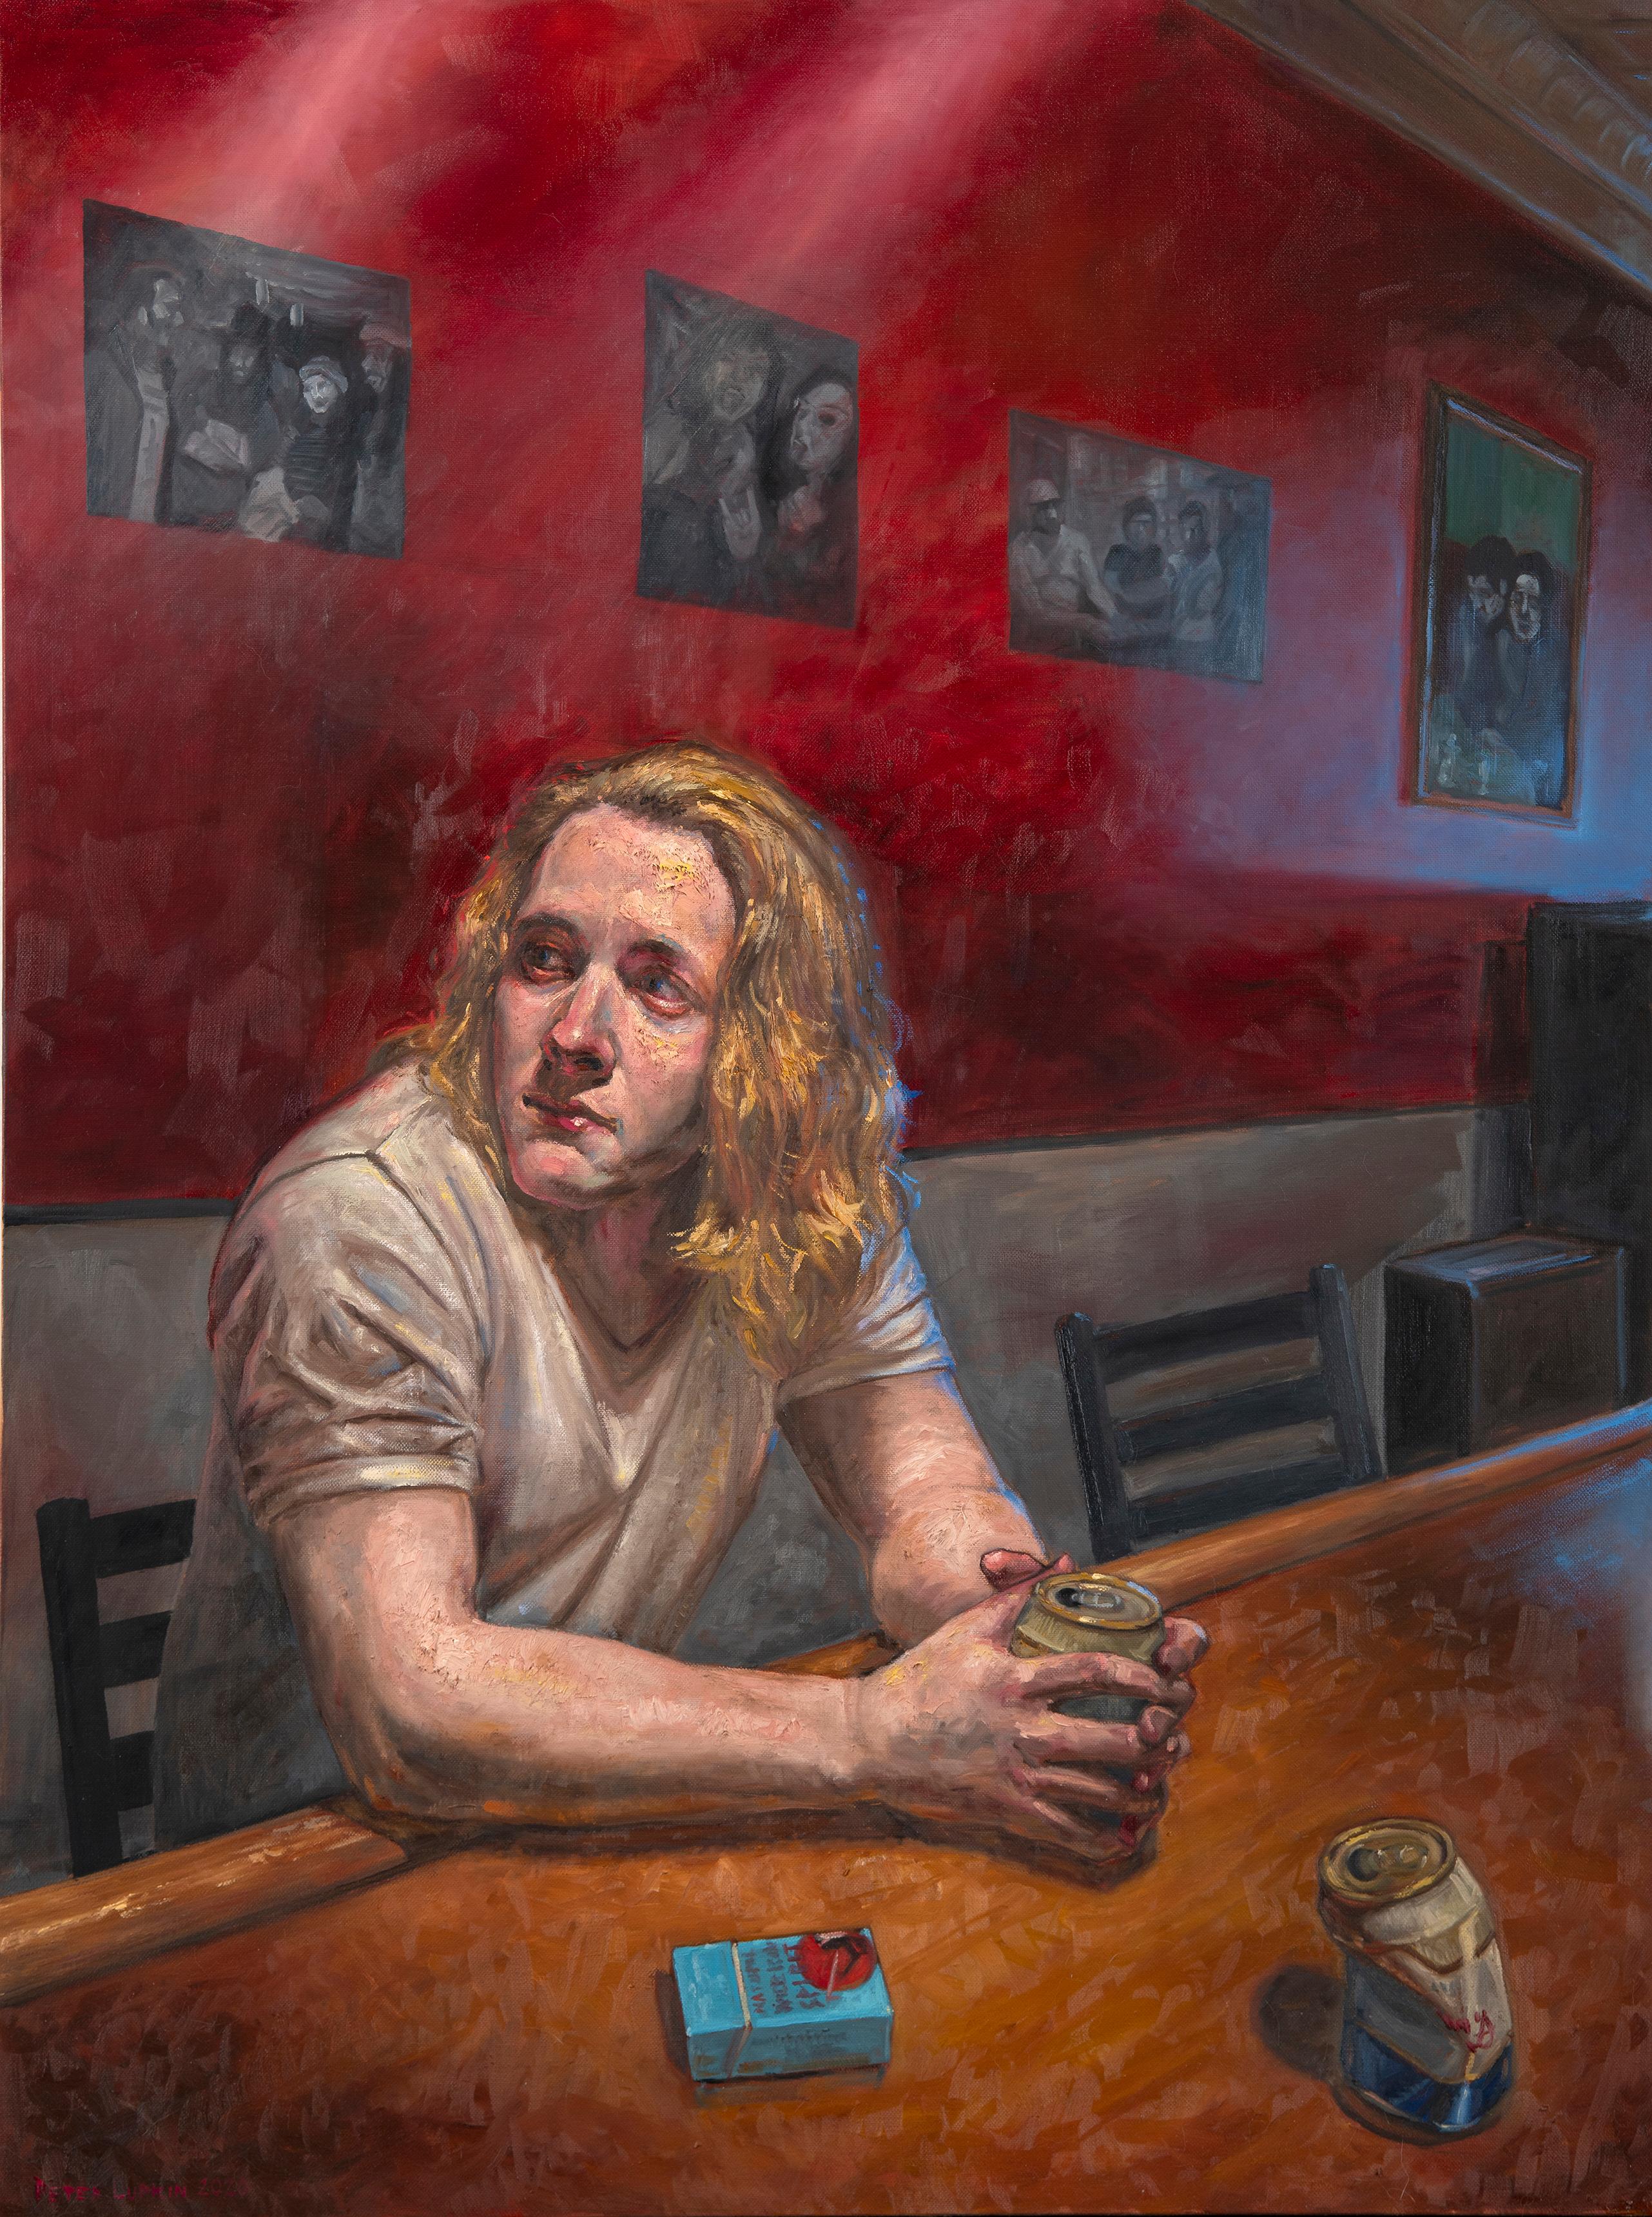 Solitary La Boheme, Single Male Figure Seated at a Bar, Smoking, Drinking Hamms